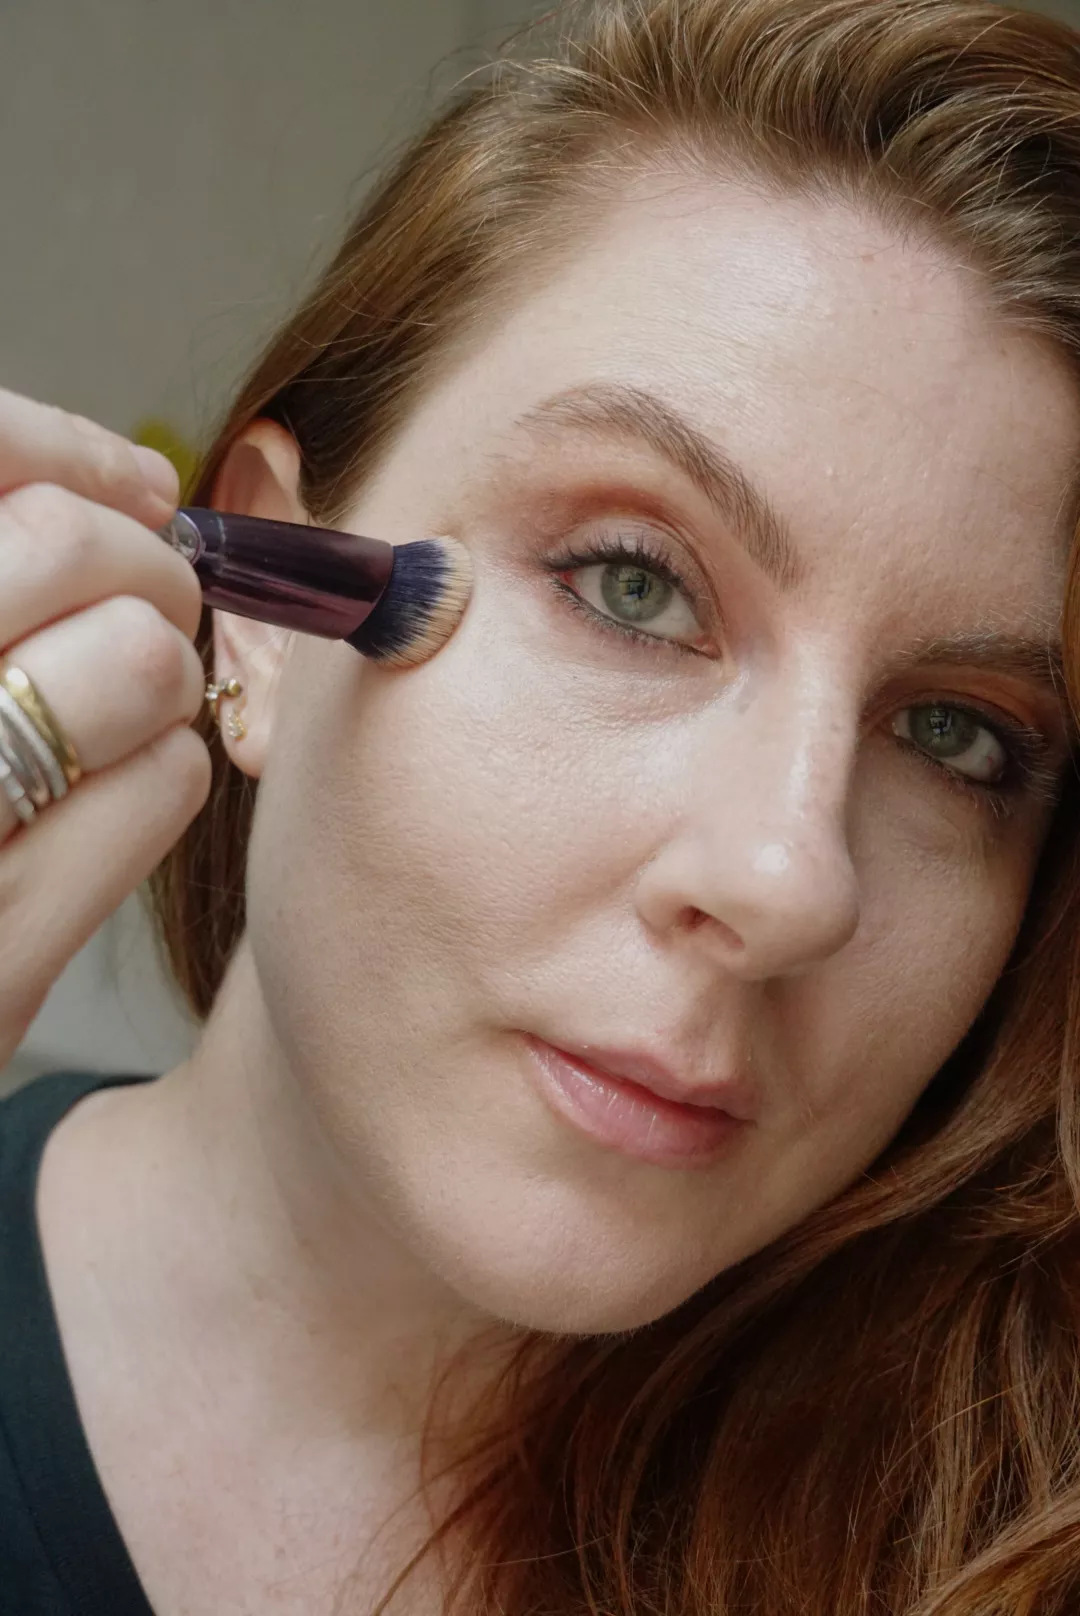 Makeup artist and Byrdie writer Ashley Rebecca blends under-eye concealer with brush